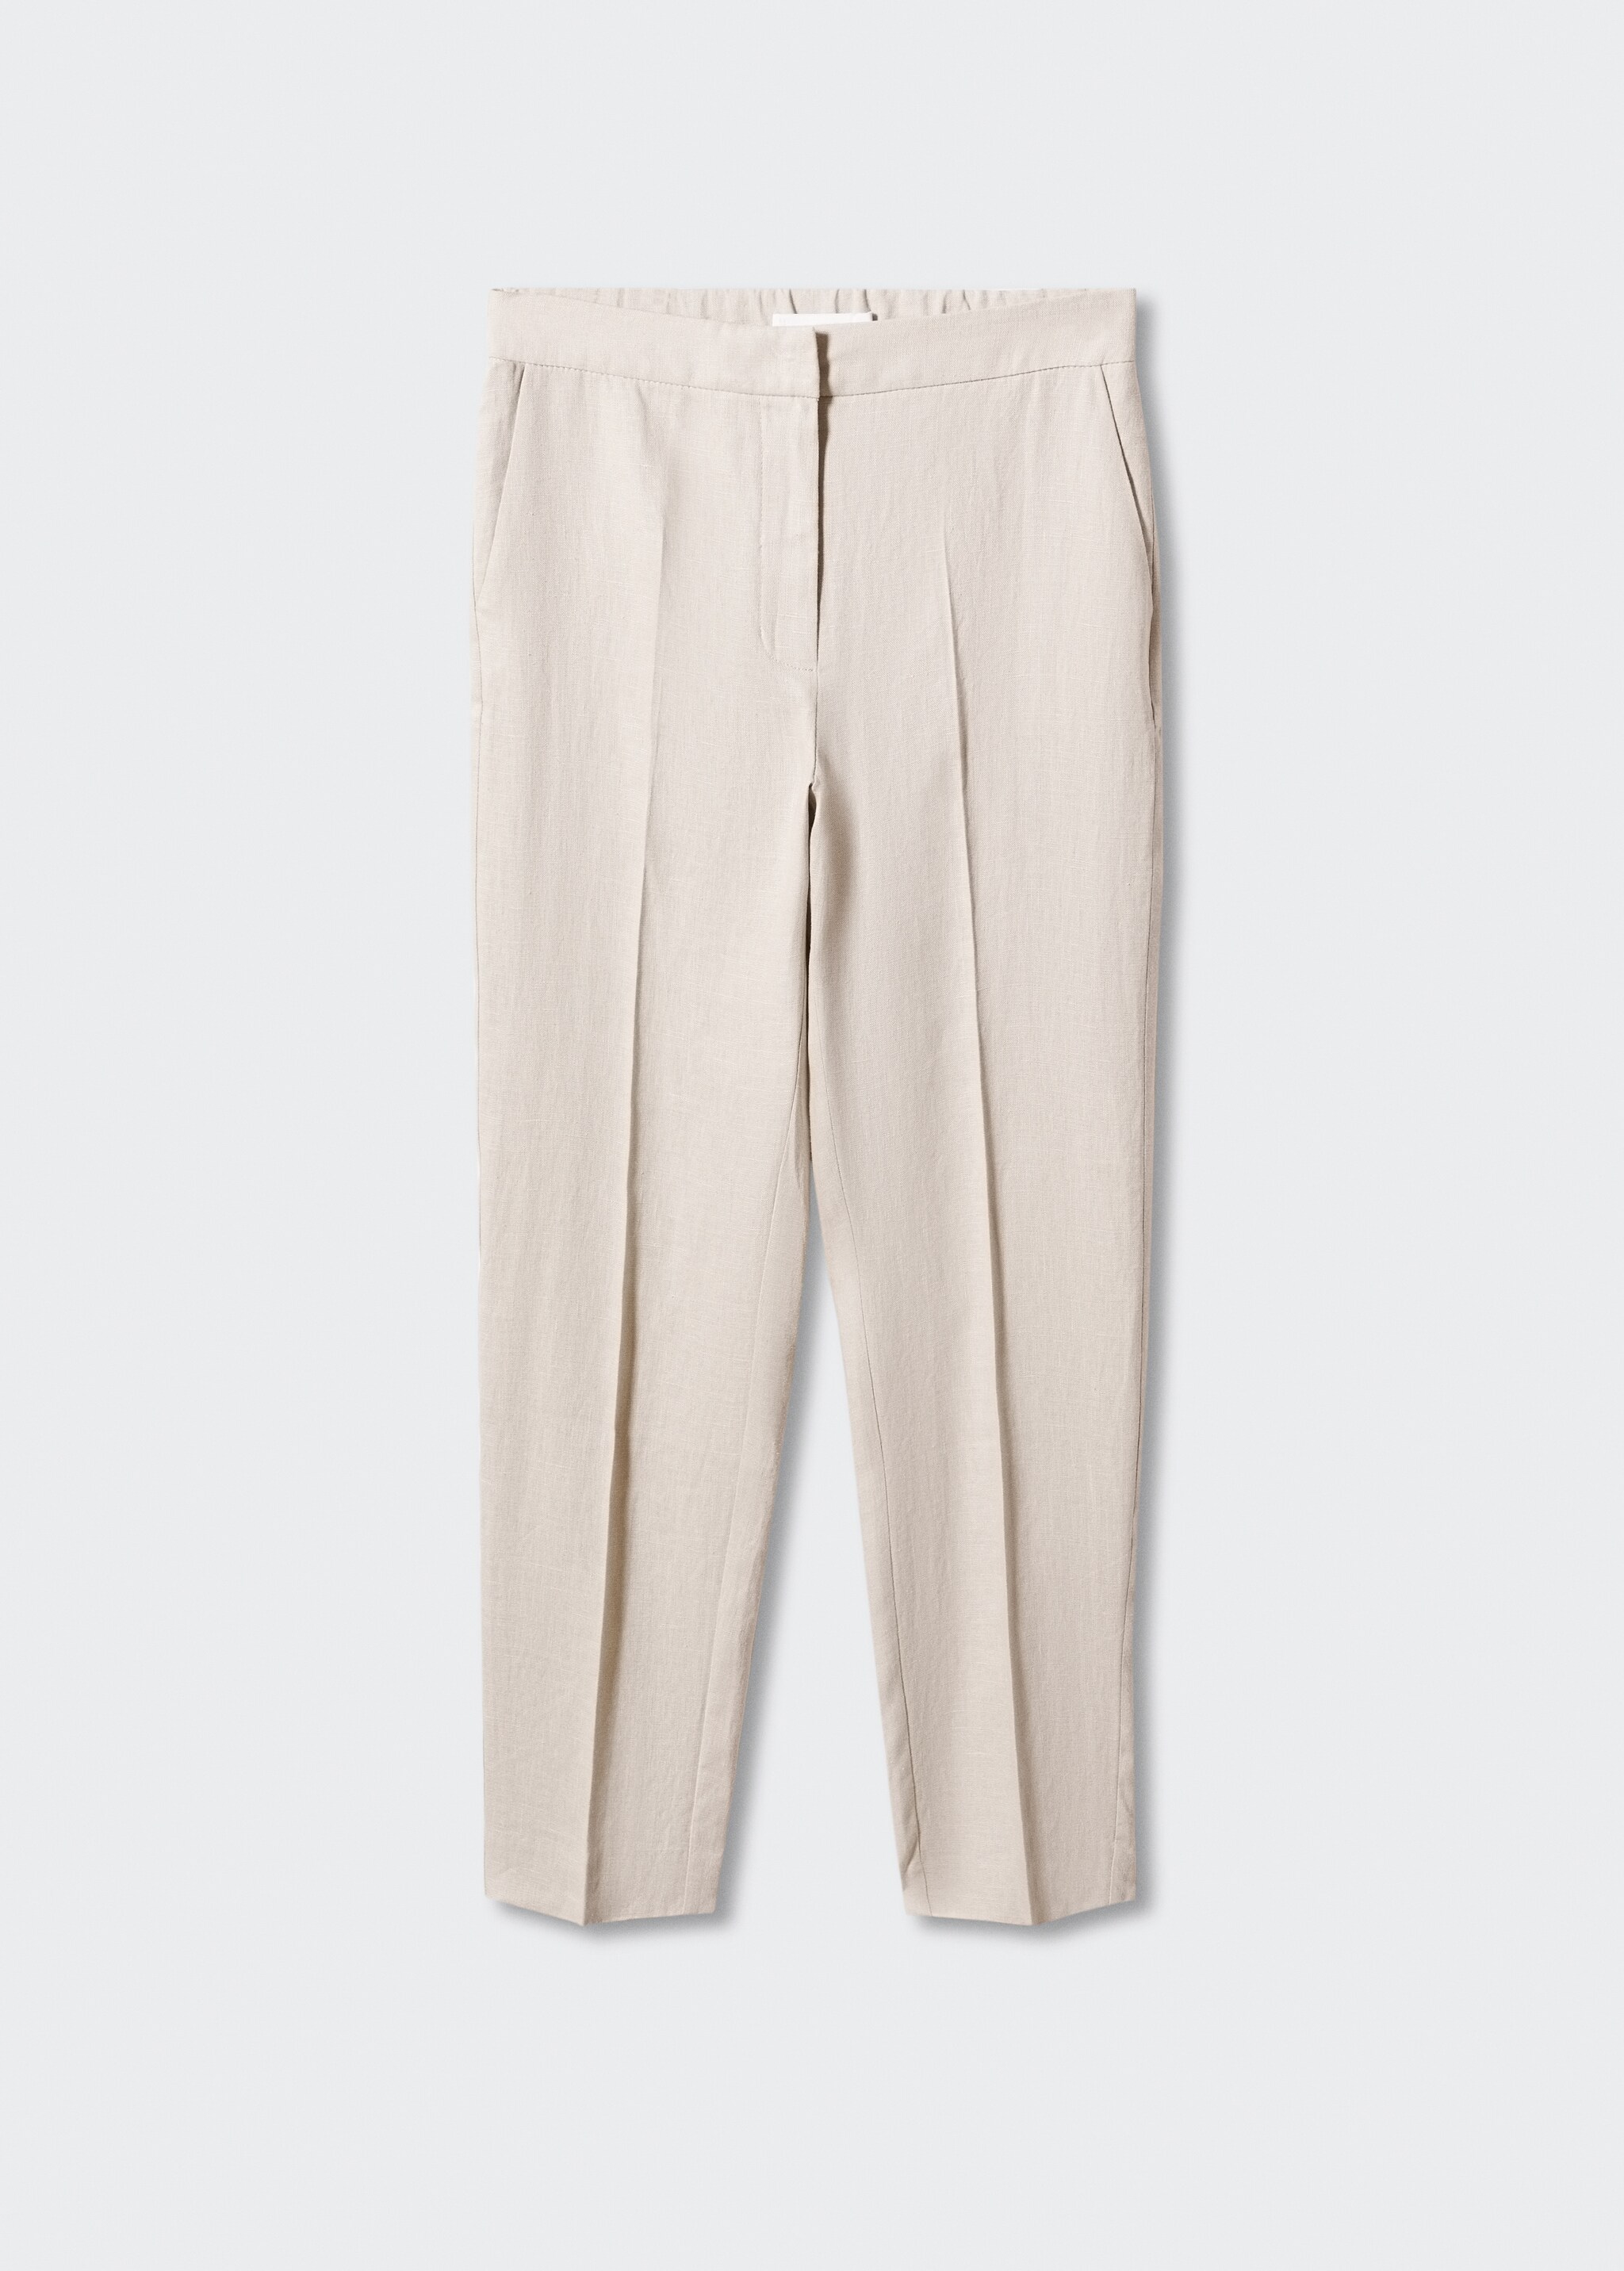 Pantalon 100 % lin - Article sans modèle